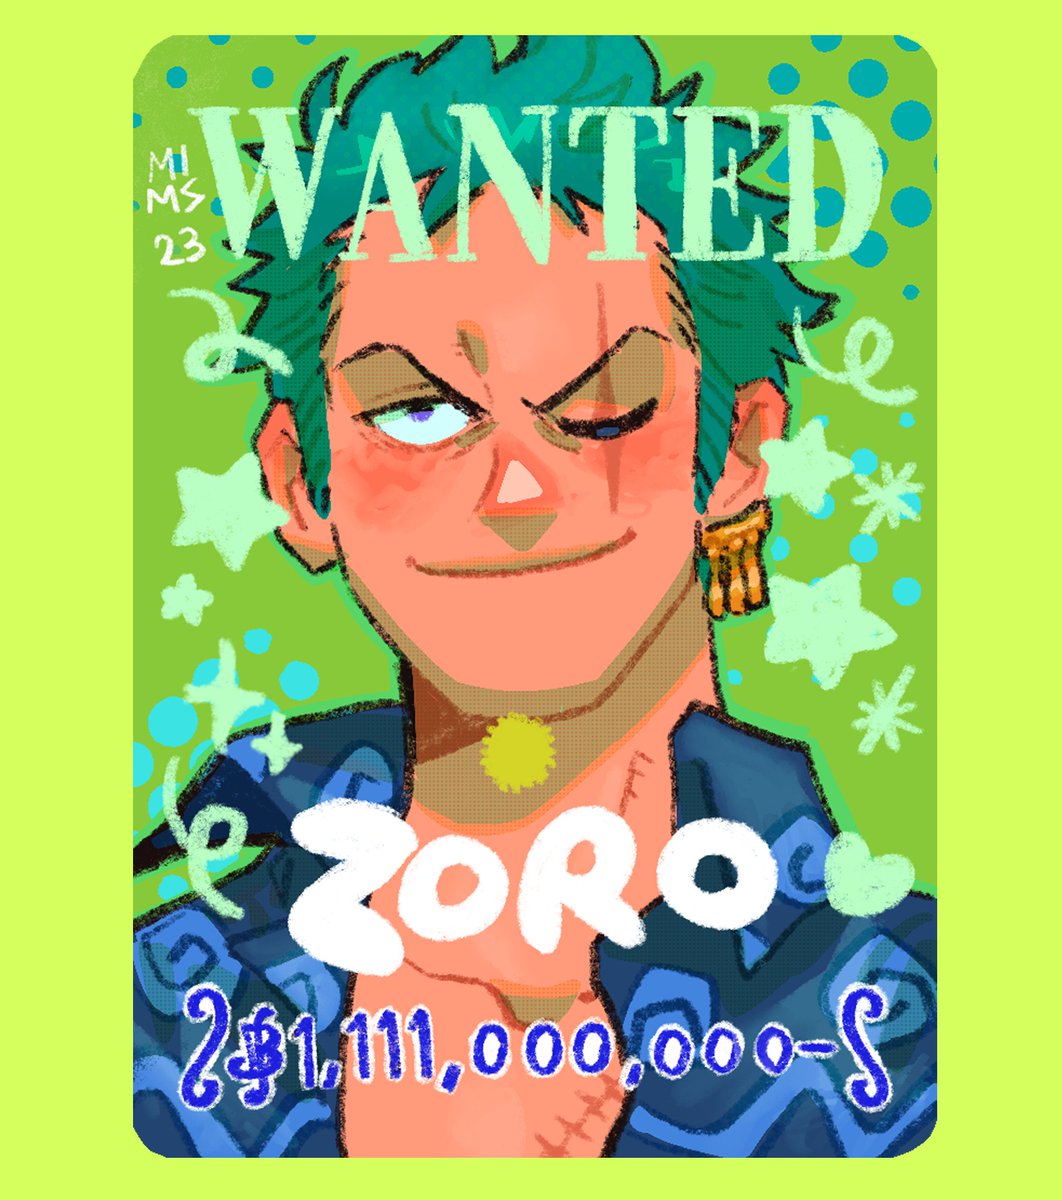 ZORO 🍙⚔️💚

[ 5/6 wanted series ]

Shares are appreciated 💖
.
.
.
#zoro #roronoazoro #strawhat #romancedawn #arlongpark #posttimeskip #onepiece #manga #anime #shonenjump